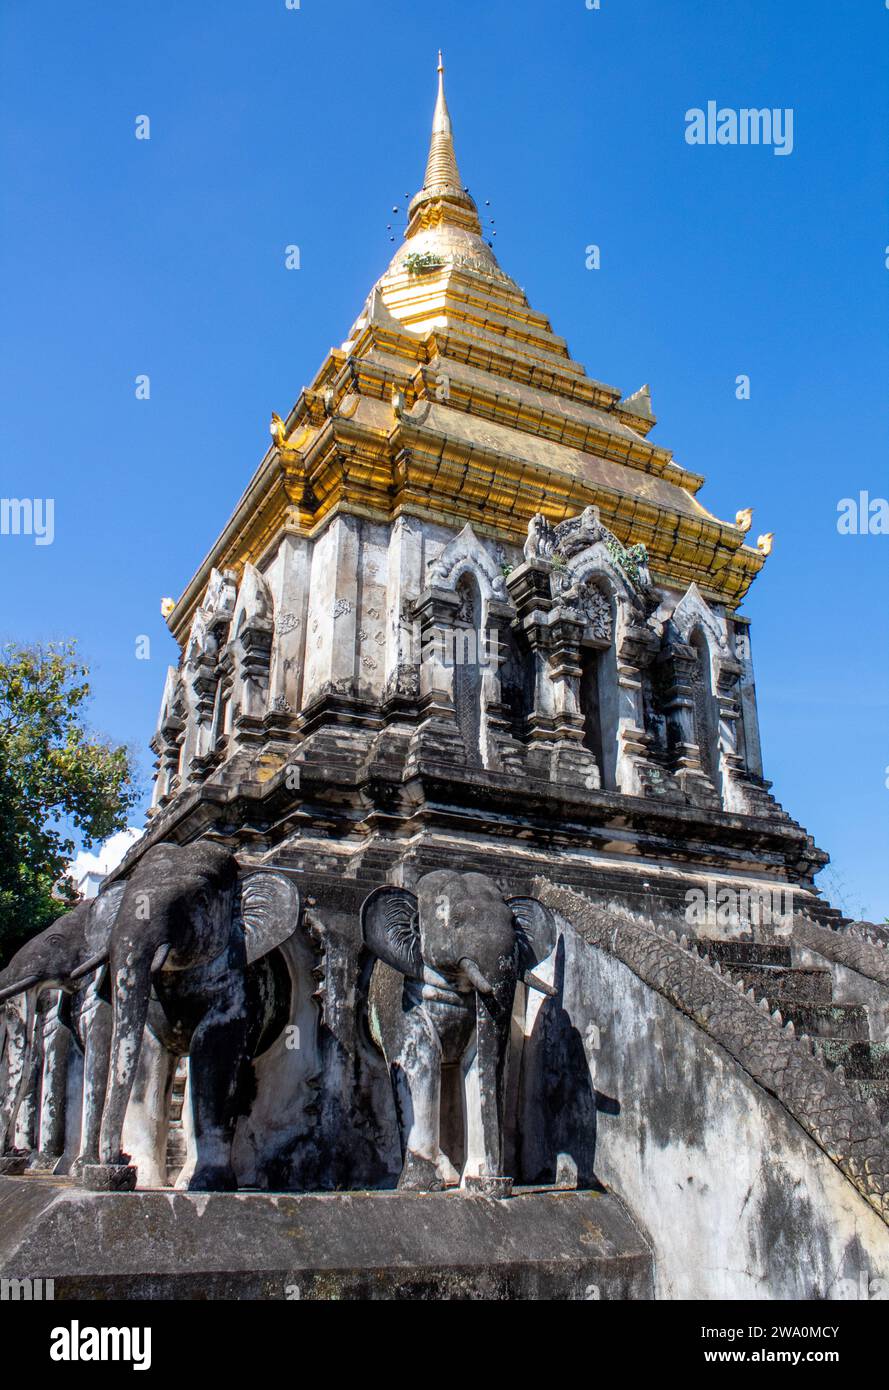 Templi thailandesi di Chiang mai Foto Stock